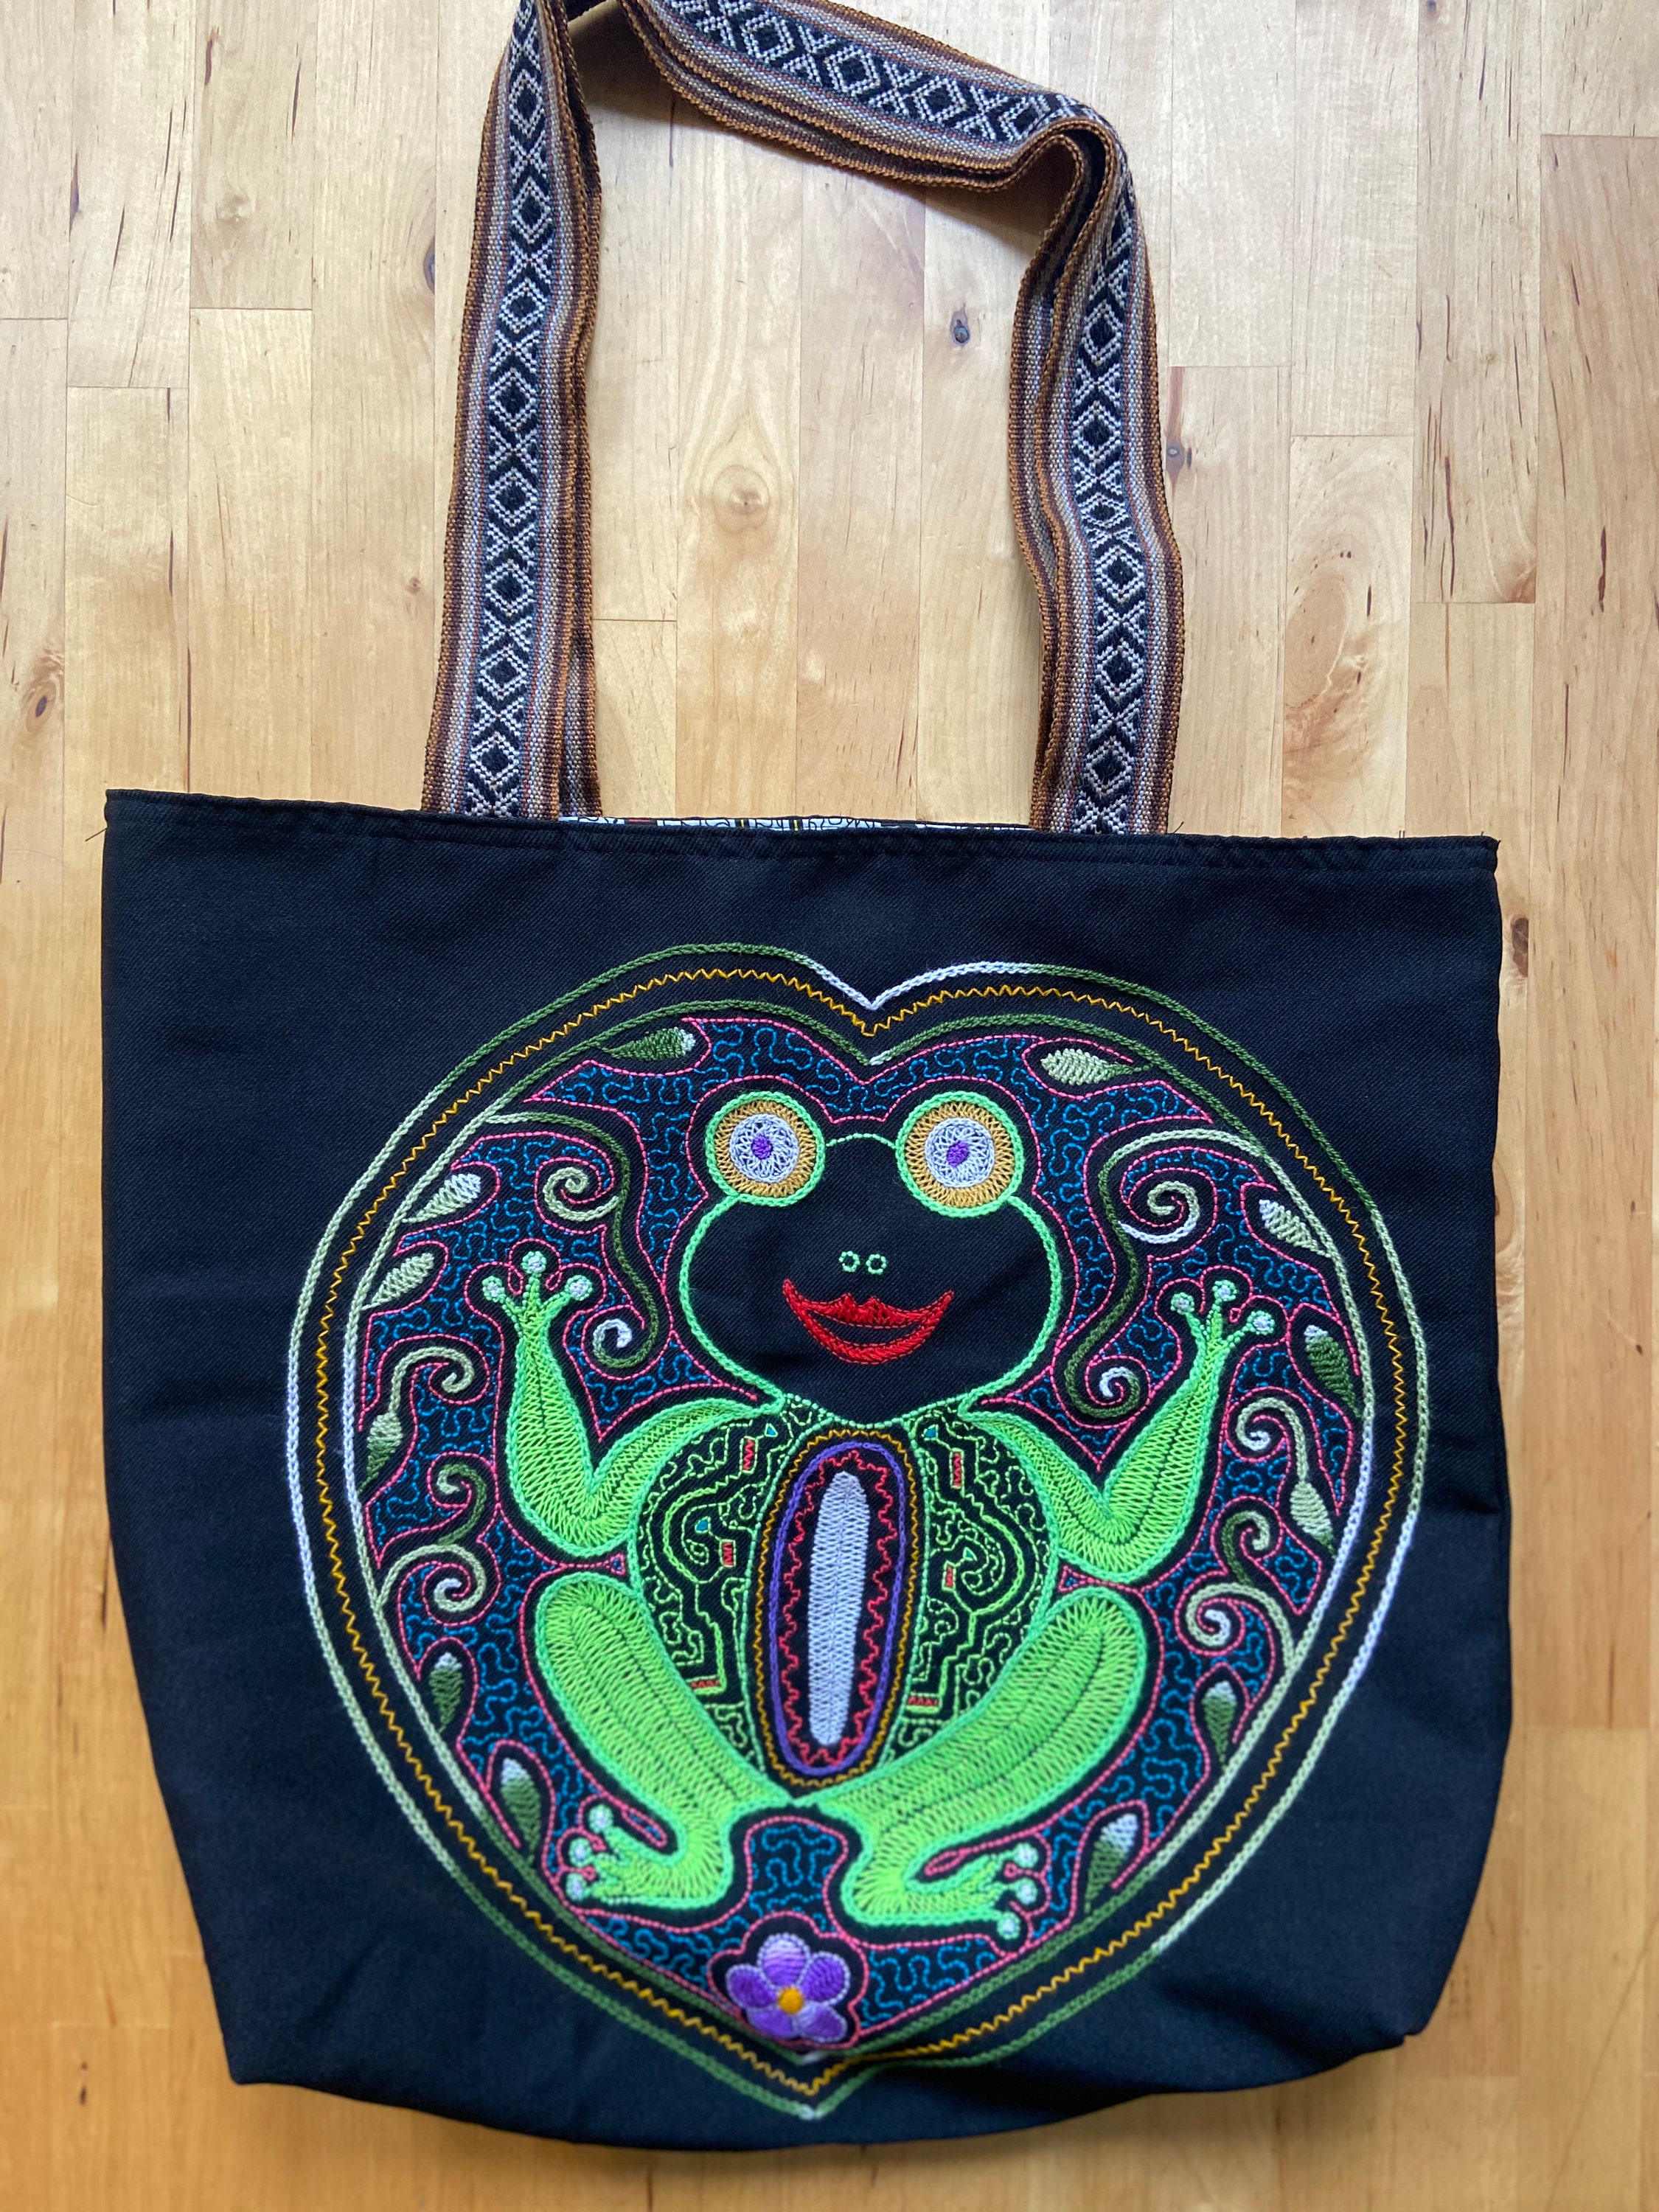 Kambo frog embroided shipibo medicine bag Bags & Purses Handbags Hobo Bags 